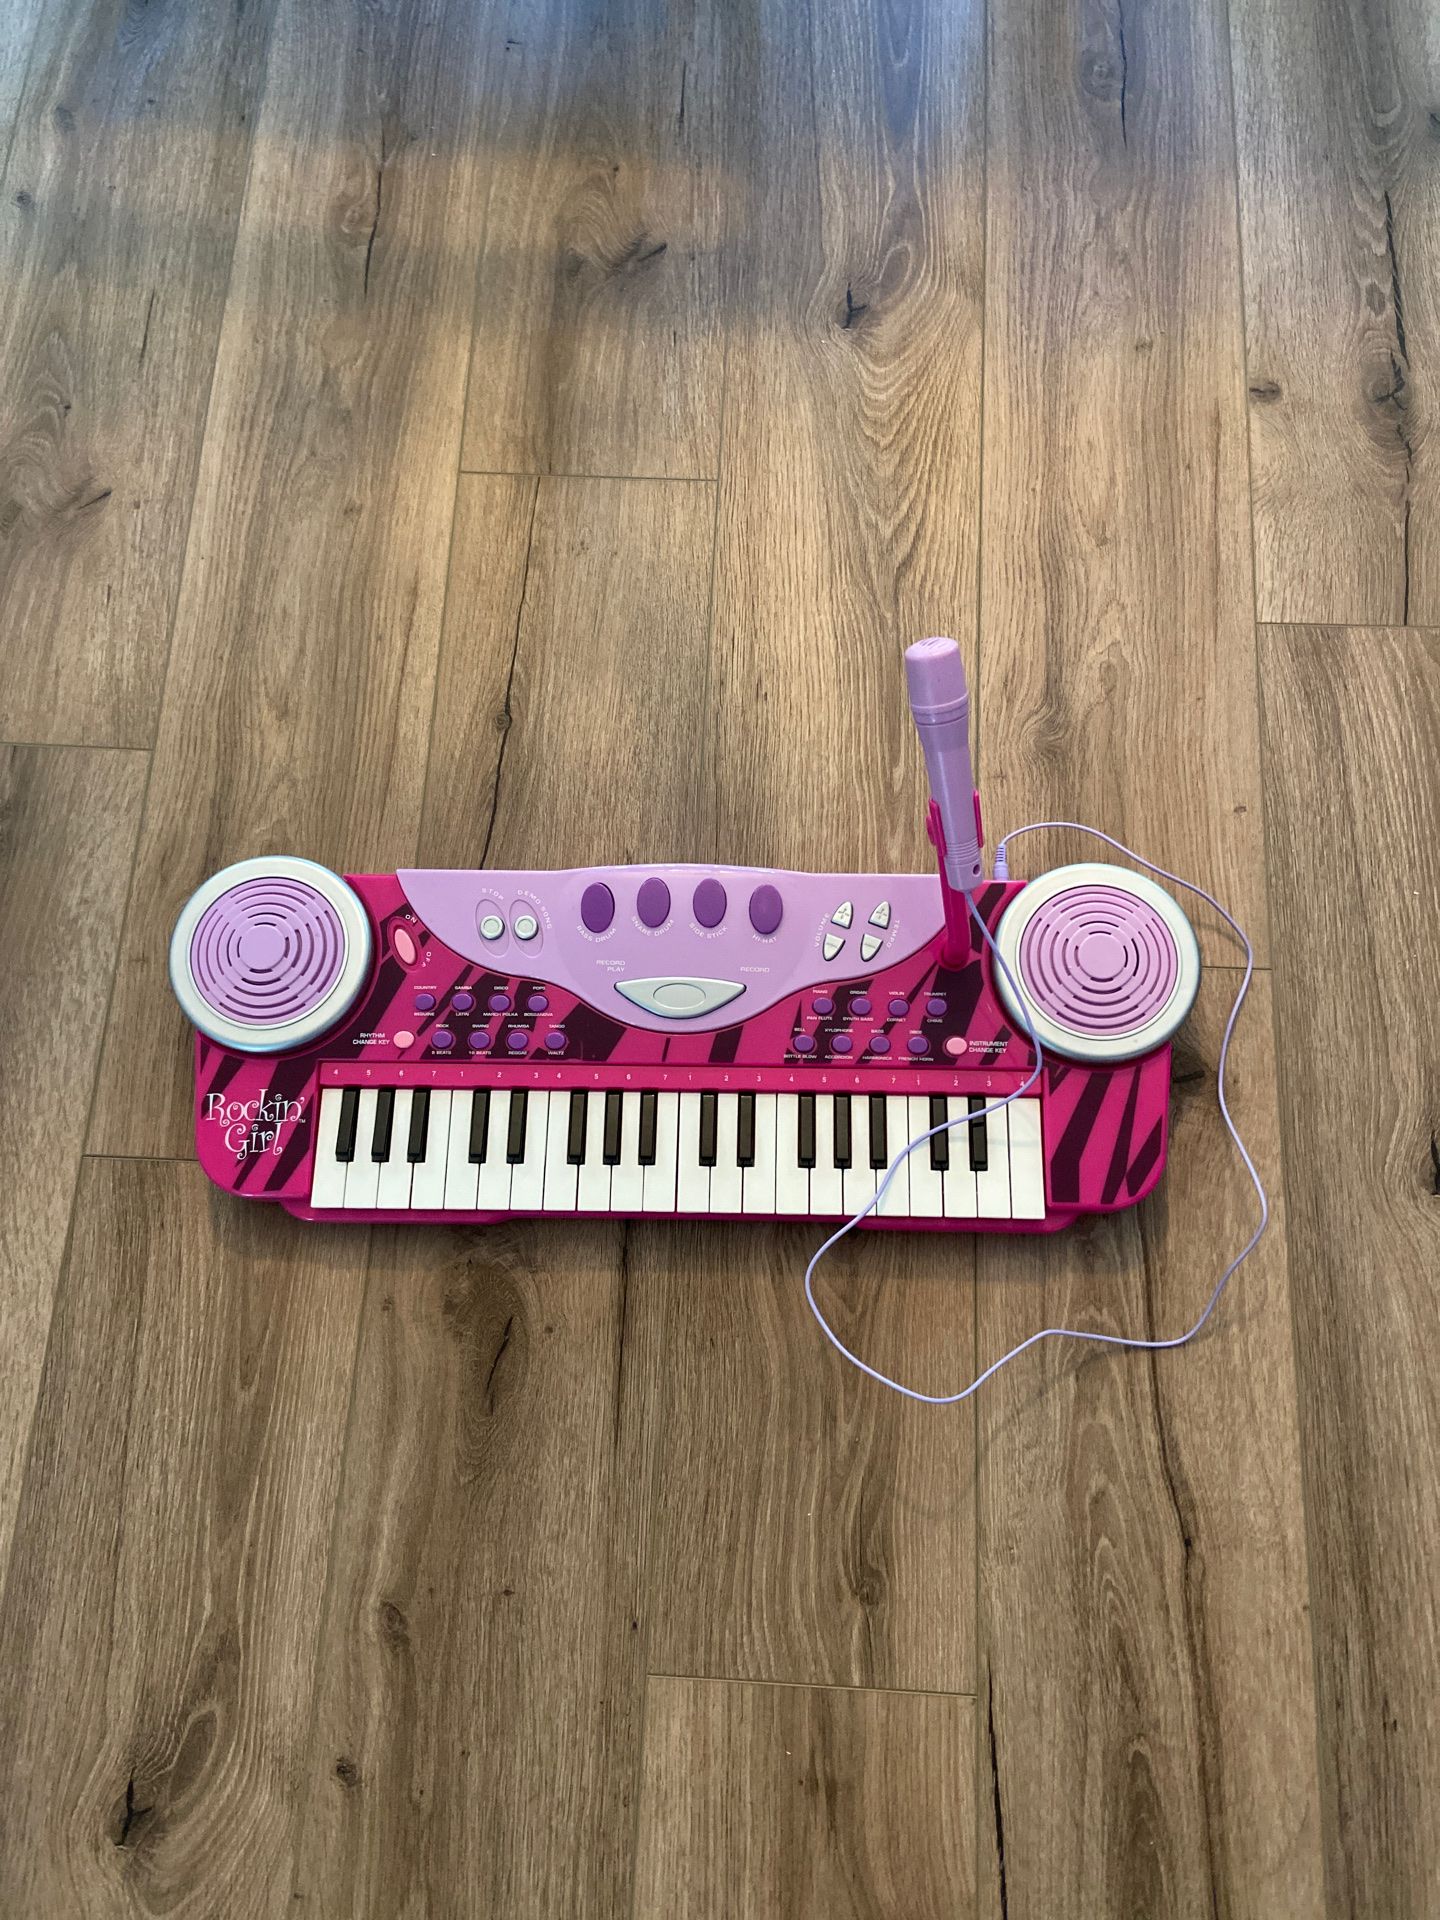 Rockin’ Girl Keyboard musical instrument